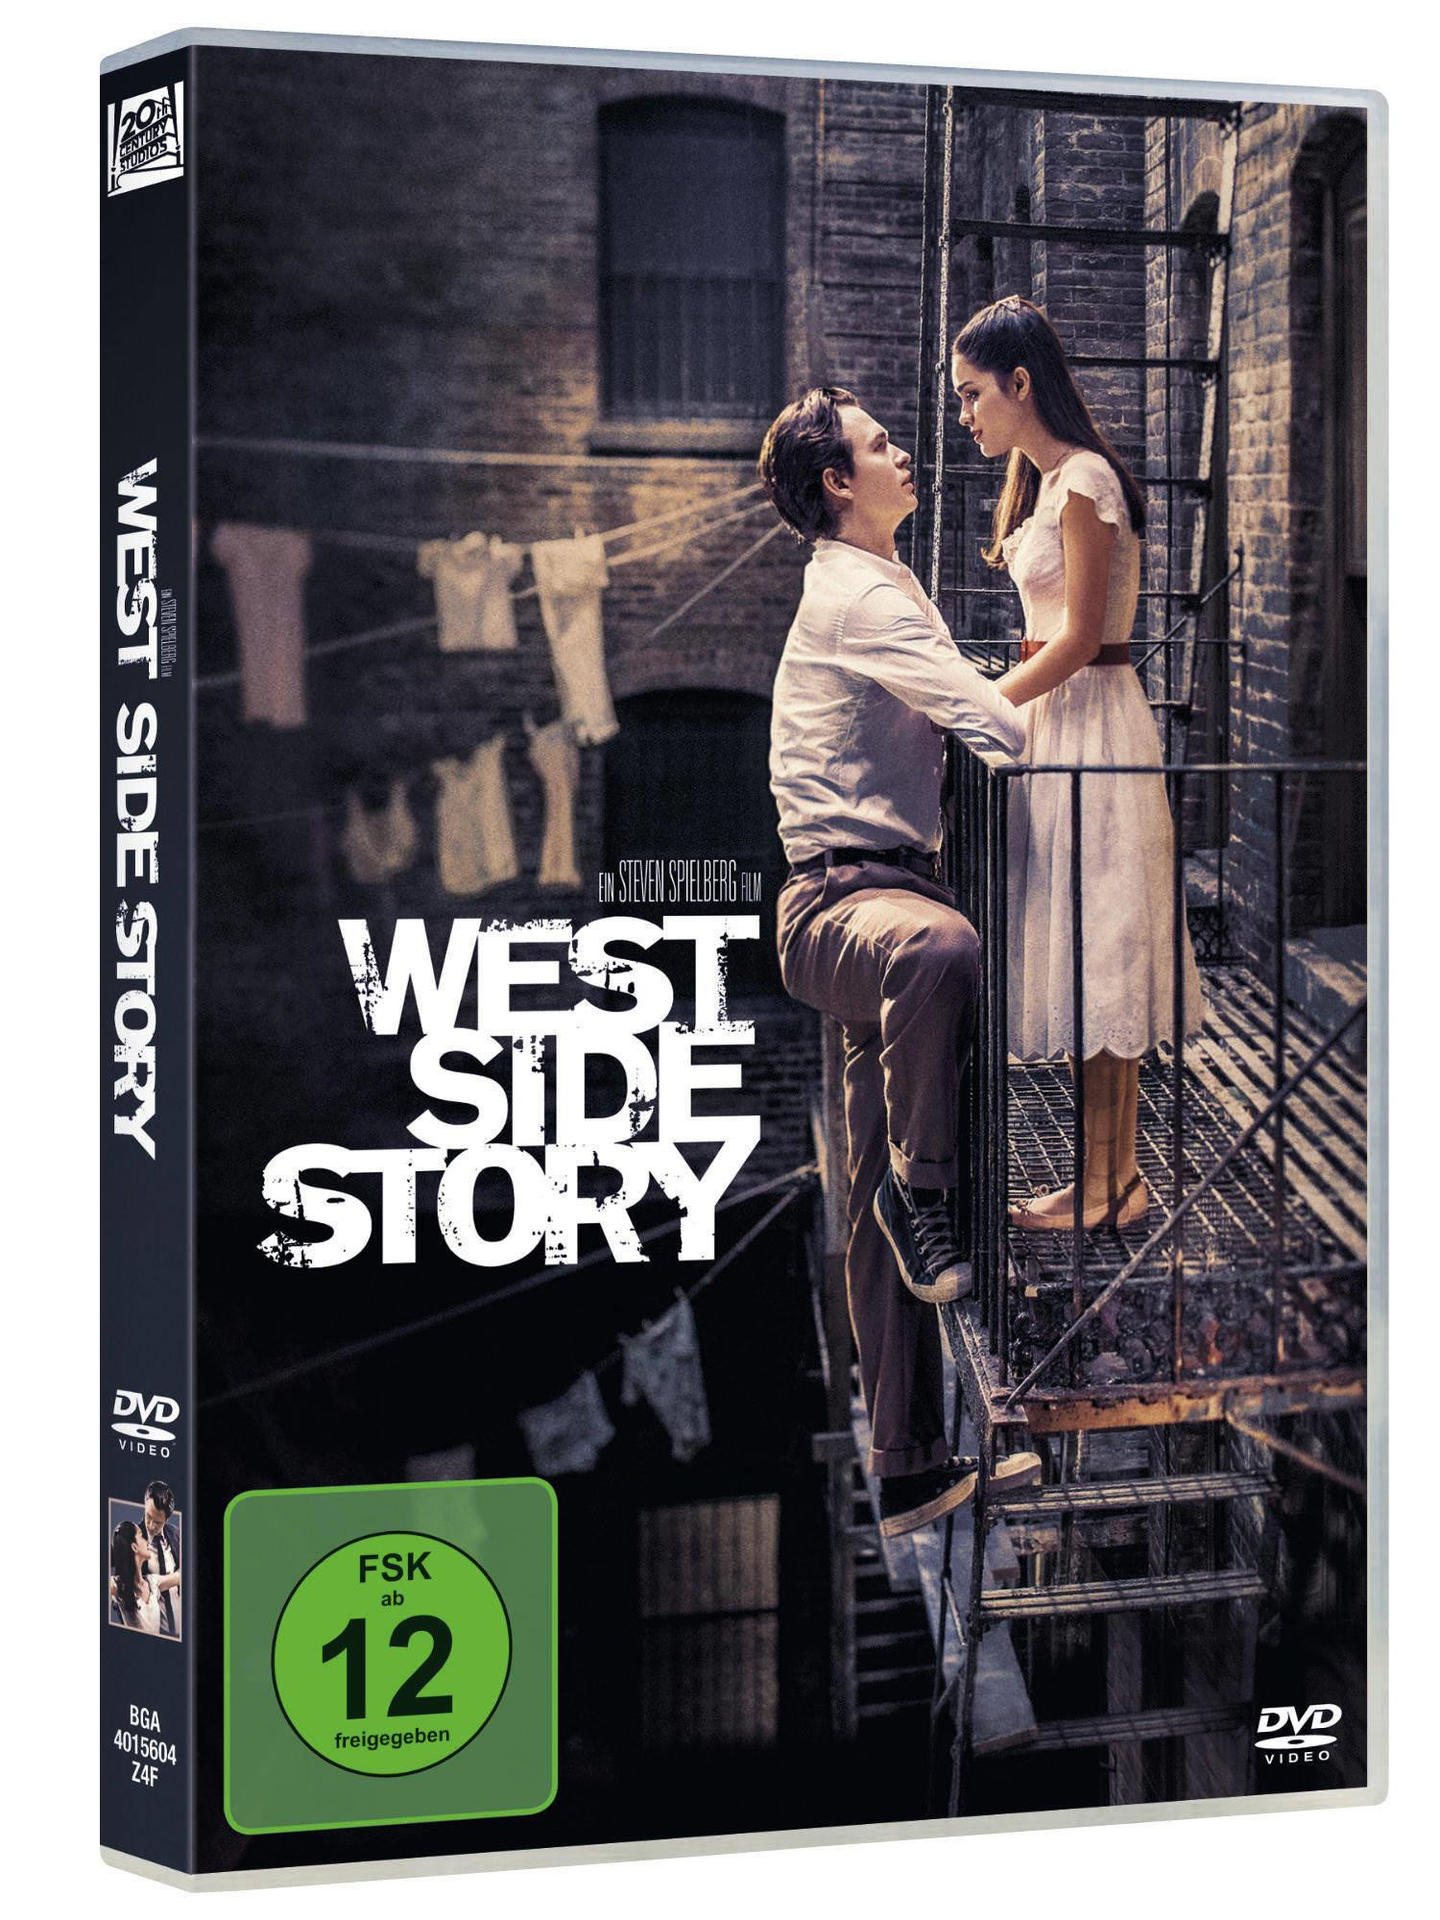 Story DVD Side West